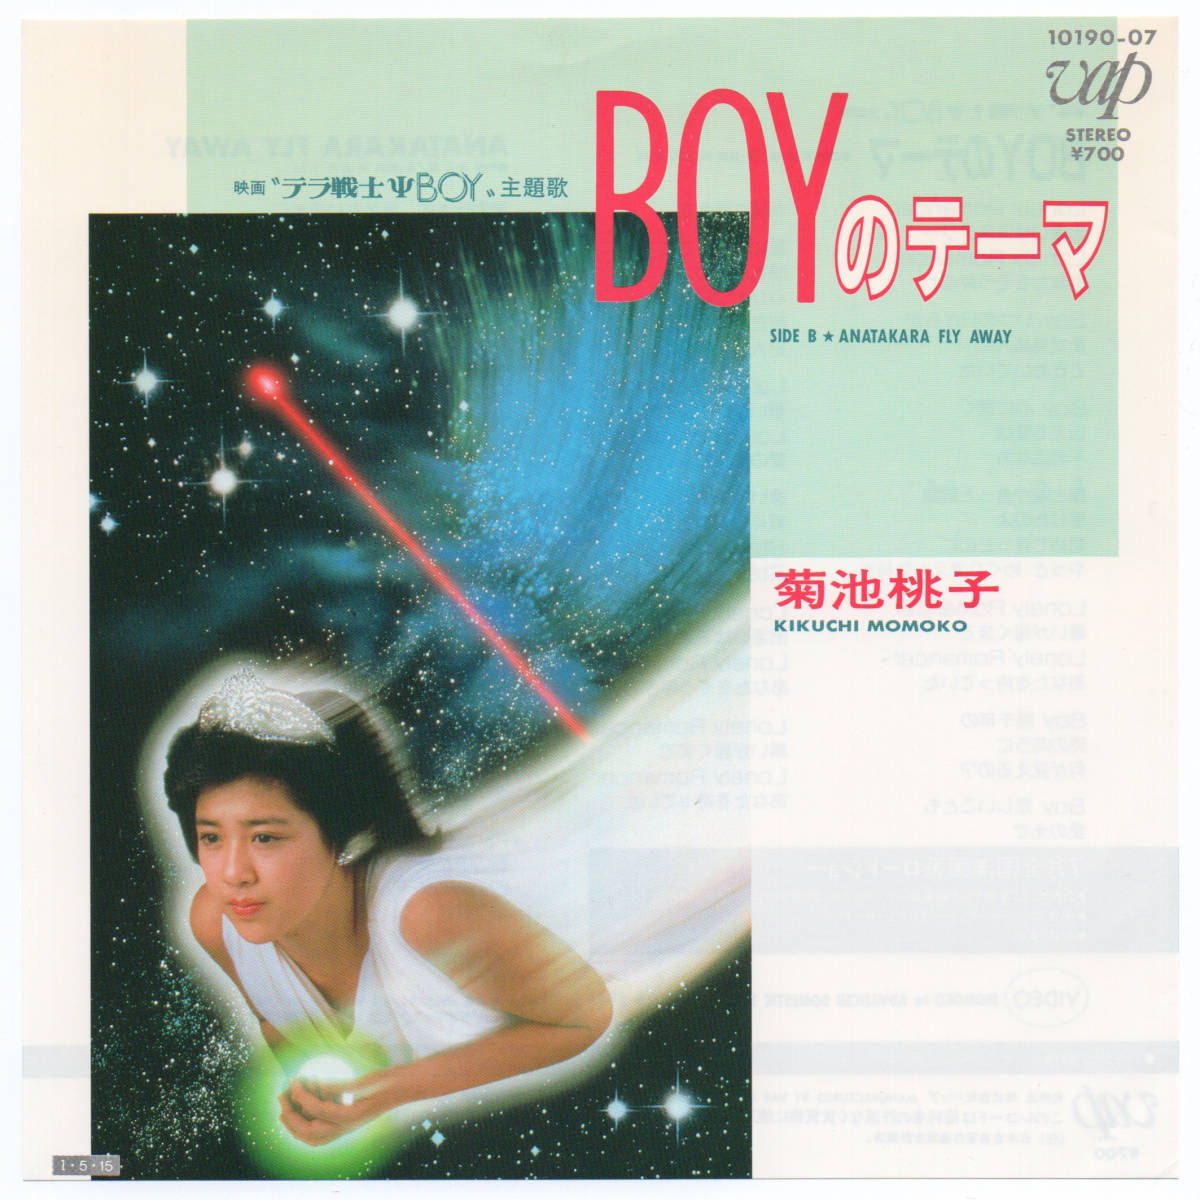 [7] \'85 день Orig / Kikuchi Momoko / Boy. Thema / Vap / 10190-07 / Synth-pop / Funk / Theme